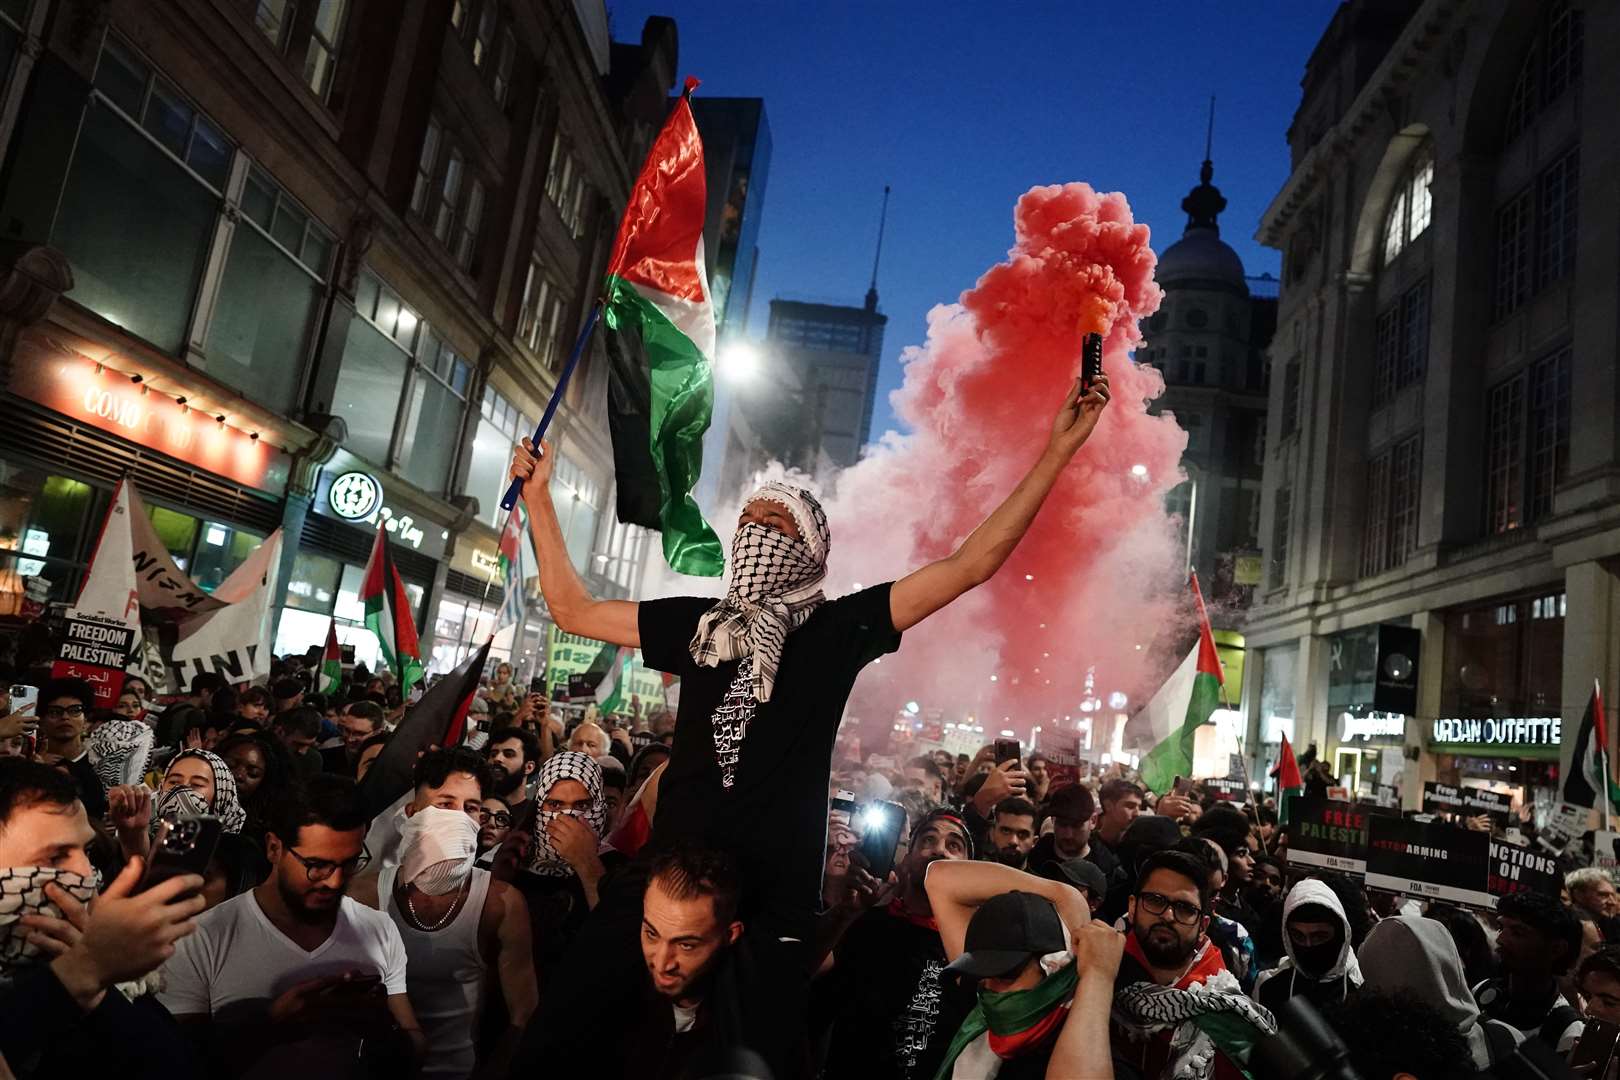 Protesters at a Palestine Solidarity Campaign demonstration near the Israeli embassy (Jordan Pettitt/PA)